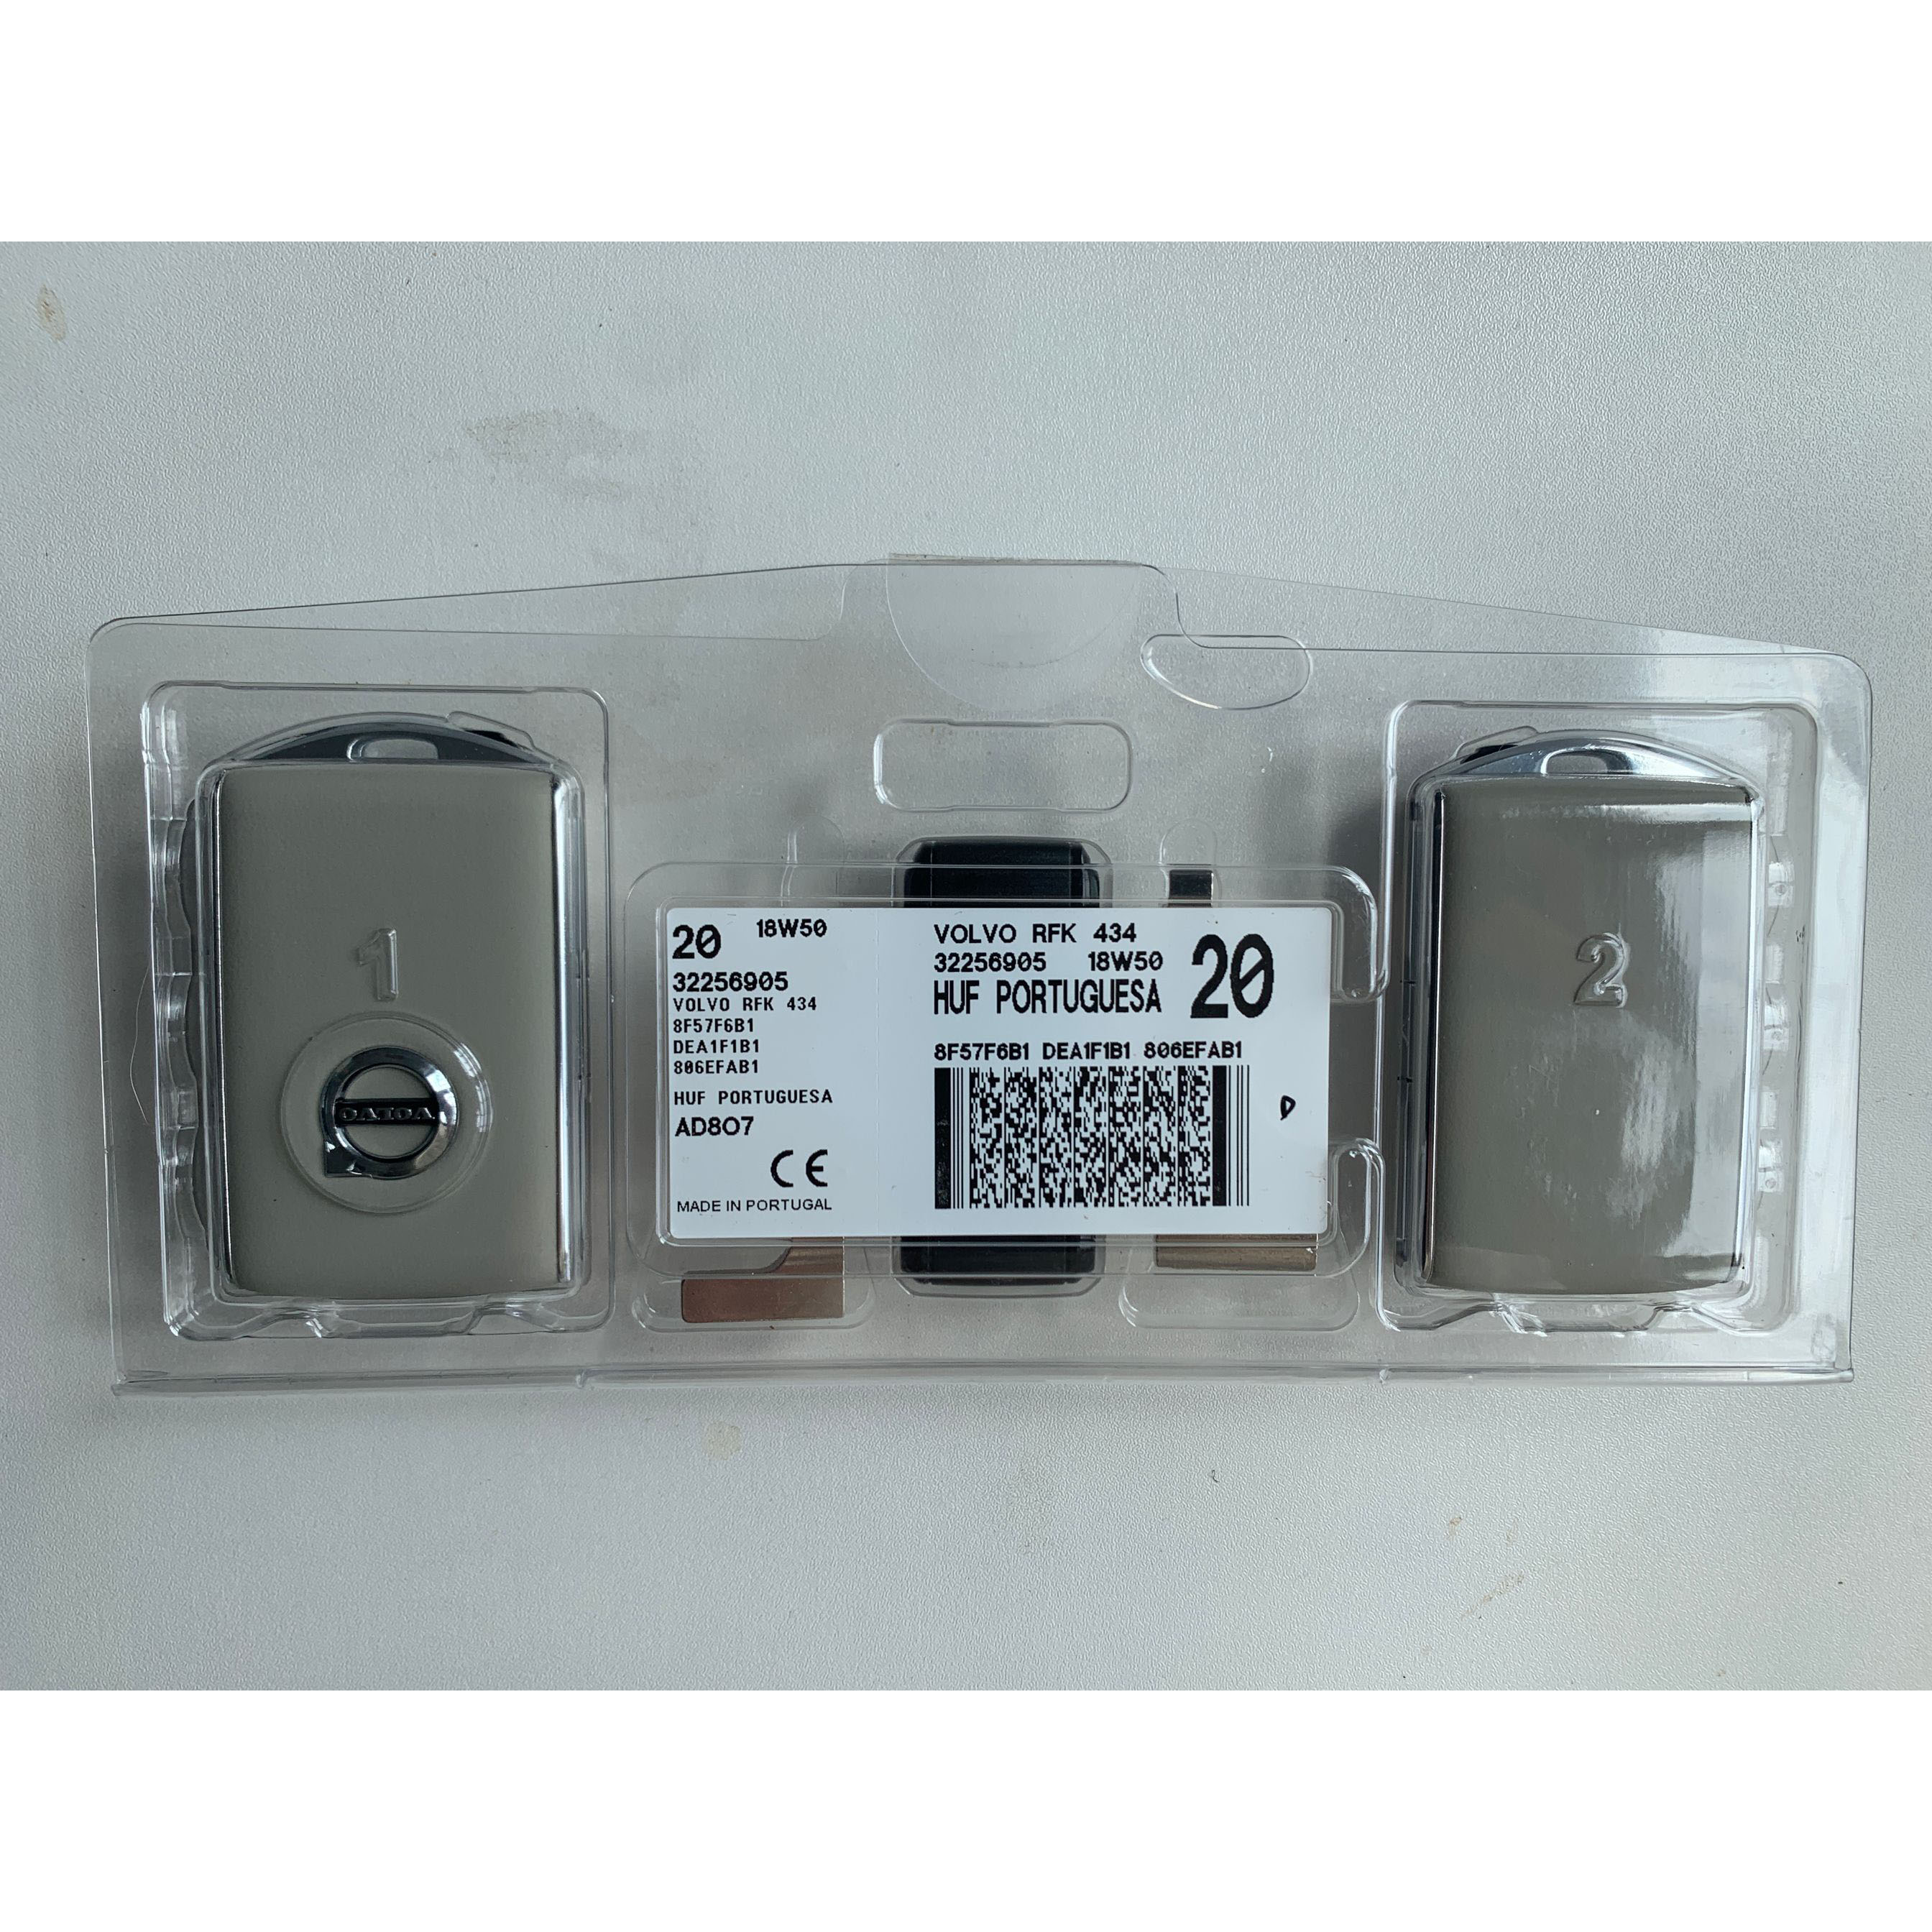 Original 4 Buttons 433 MHz Smart Key Set for Volvo -HUF8432 Light Gray Color - Genuine Leather